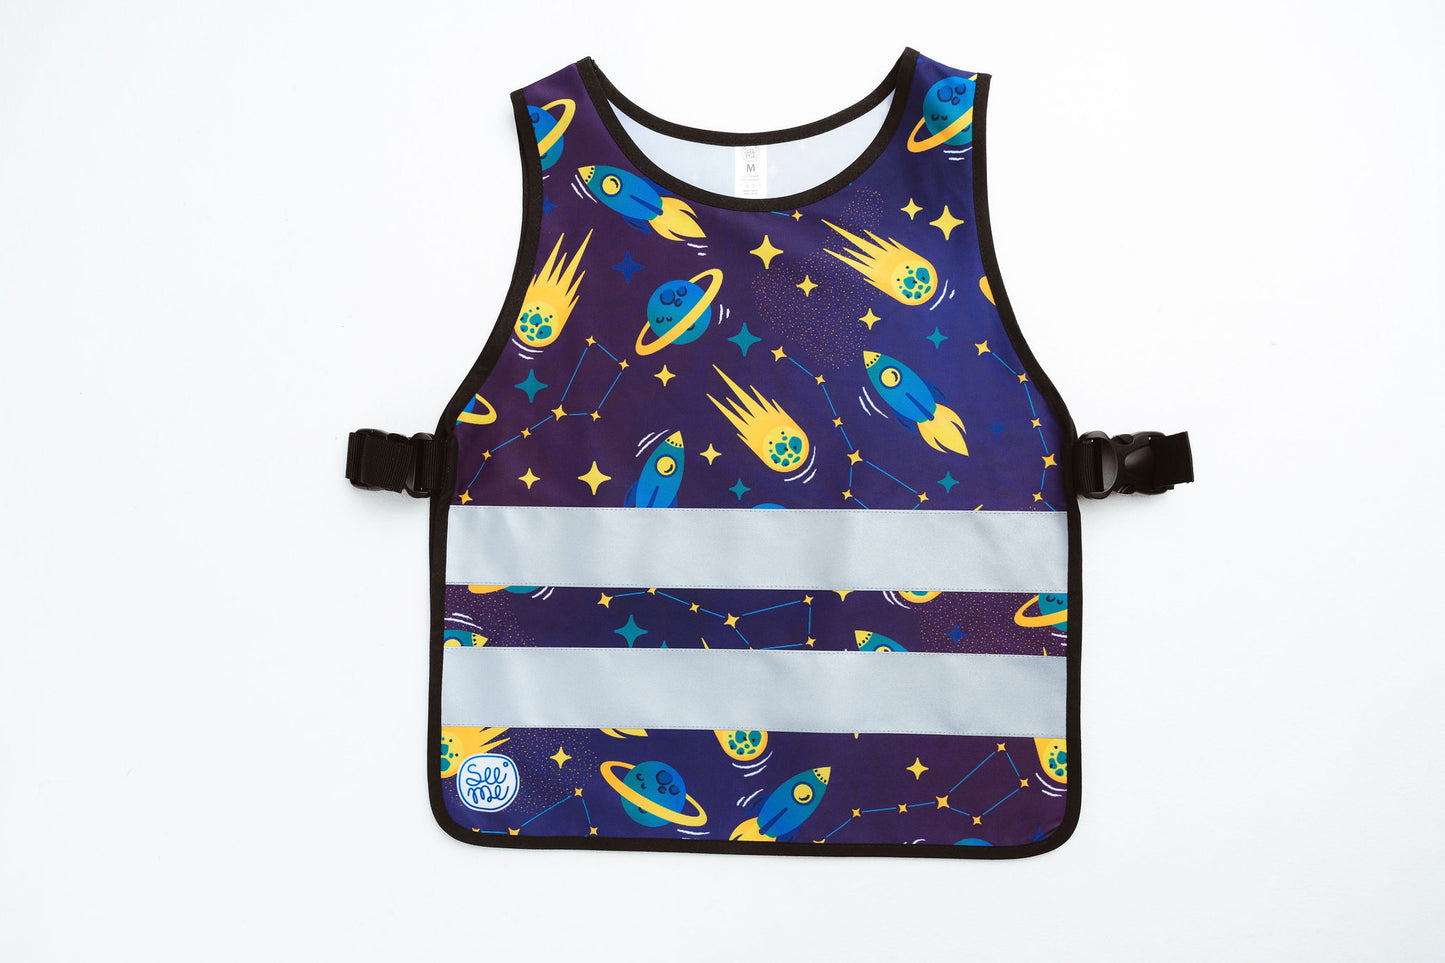 Children's reflective vest with space pattern. Custom reflective safety vest for kids